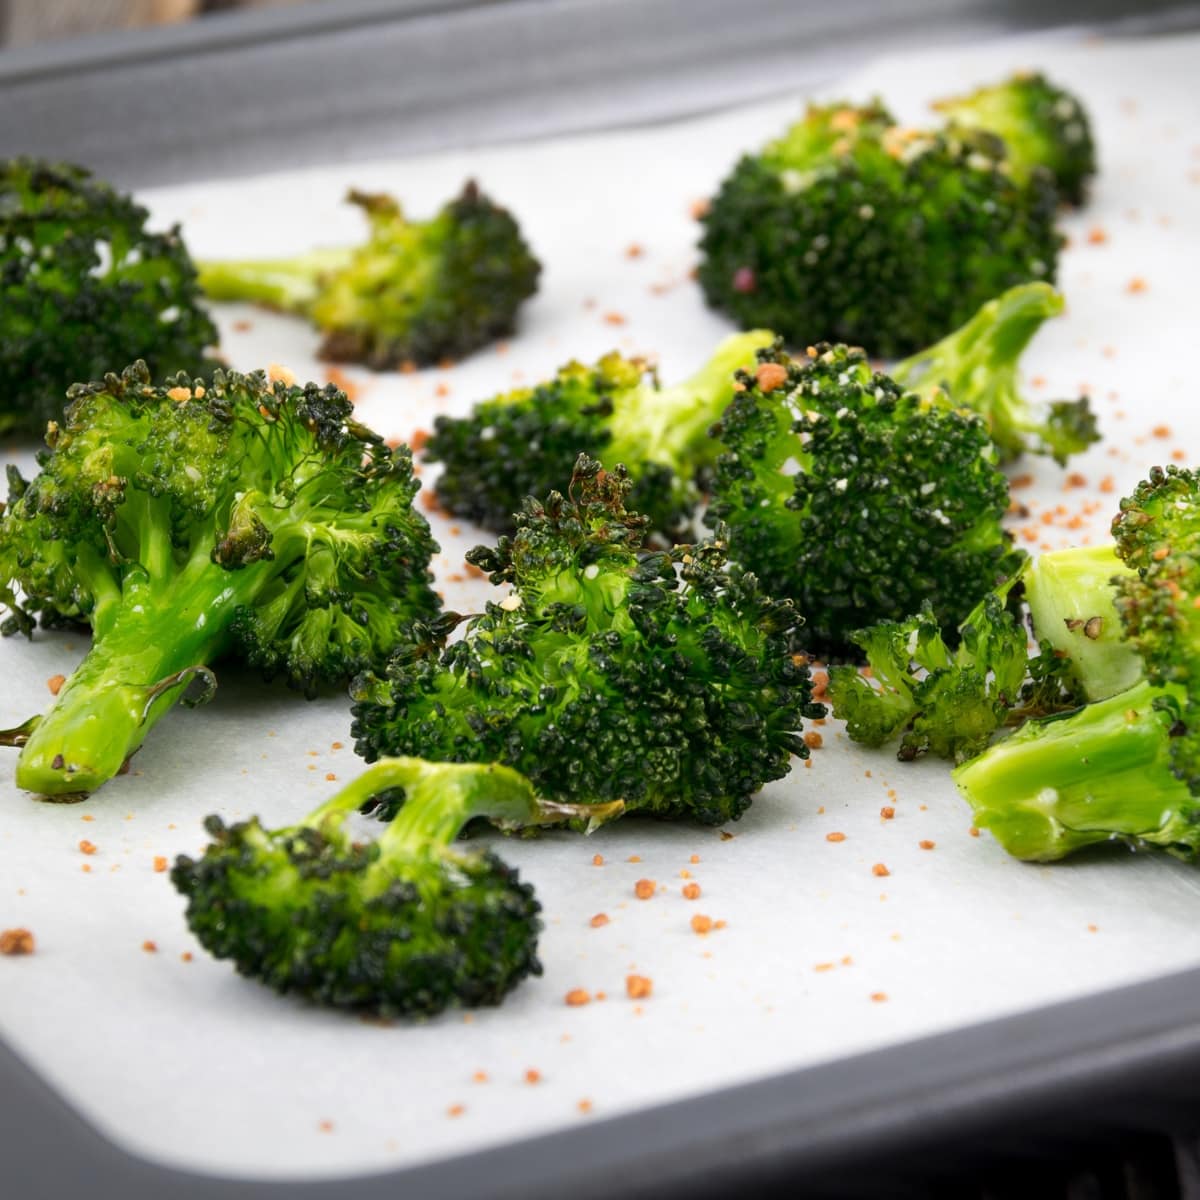 Broccoli florets in a baking sheet.